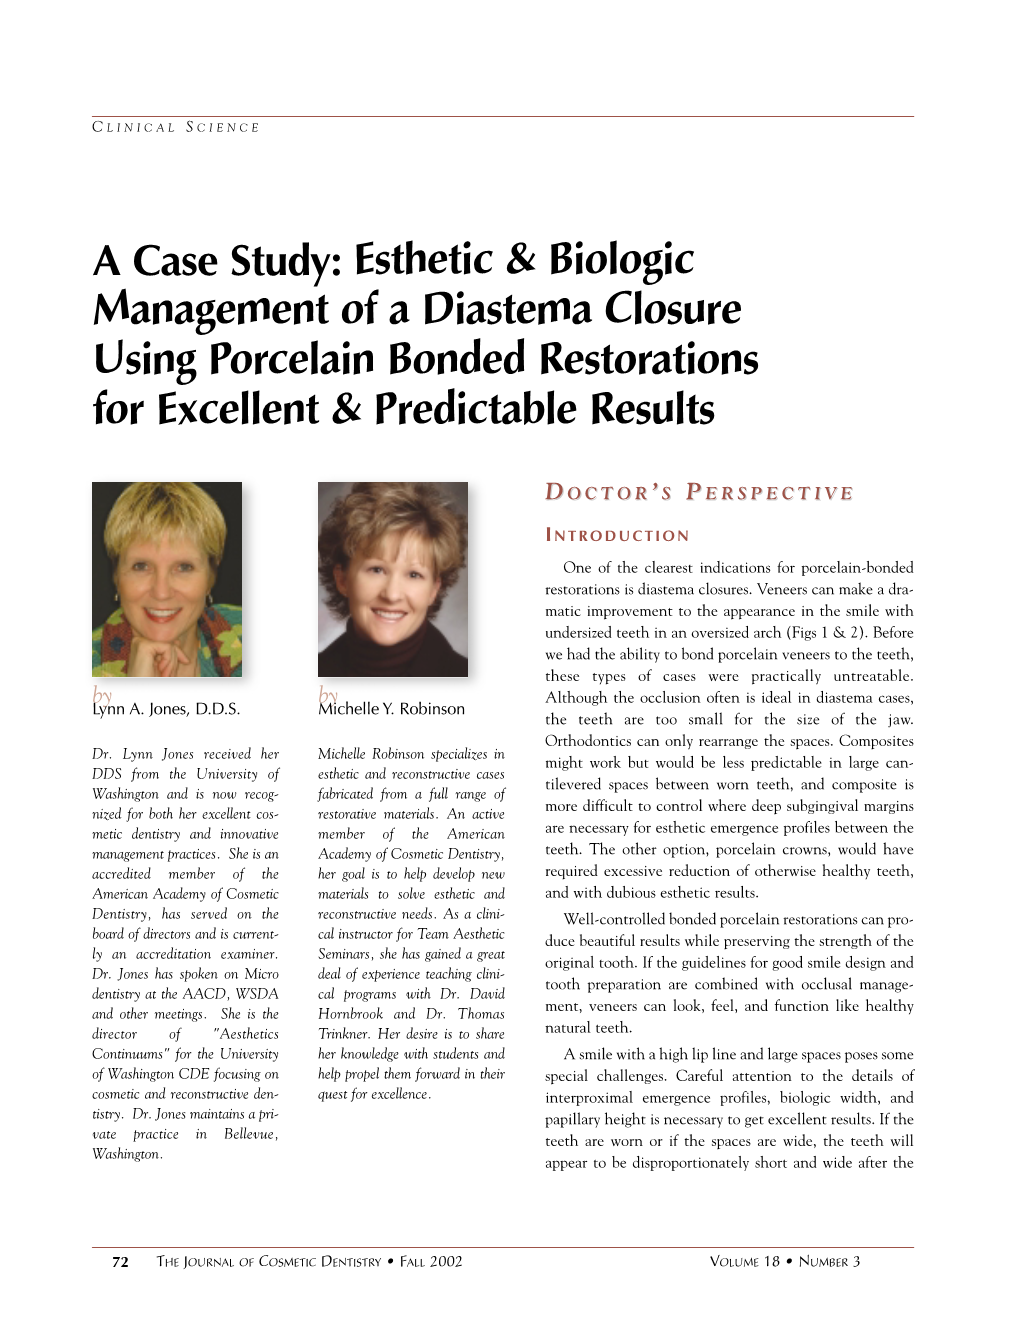 Esthetic & Biologic Management of a Diastema Closure Using Porcelain